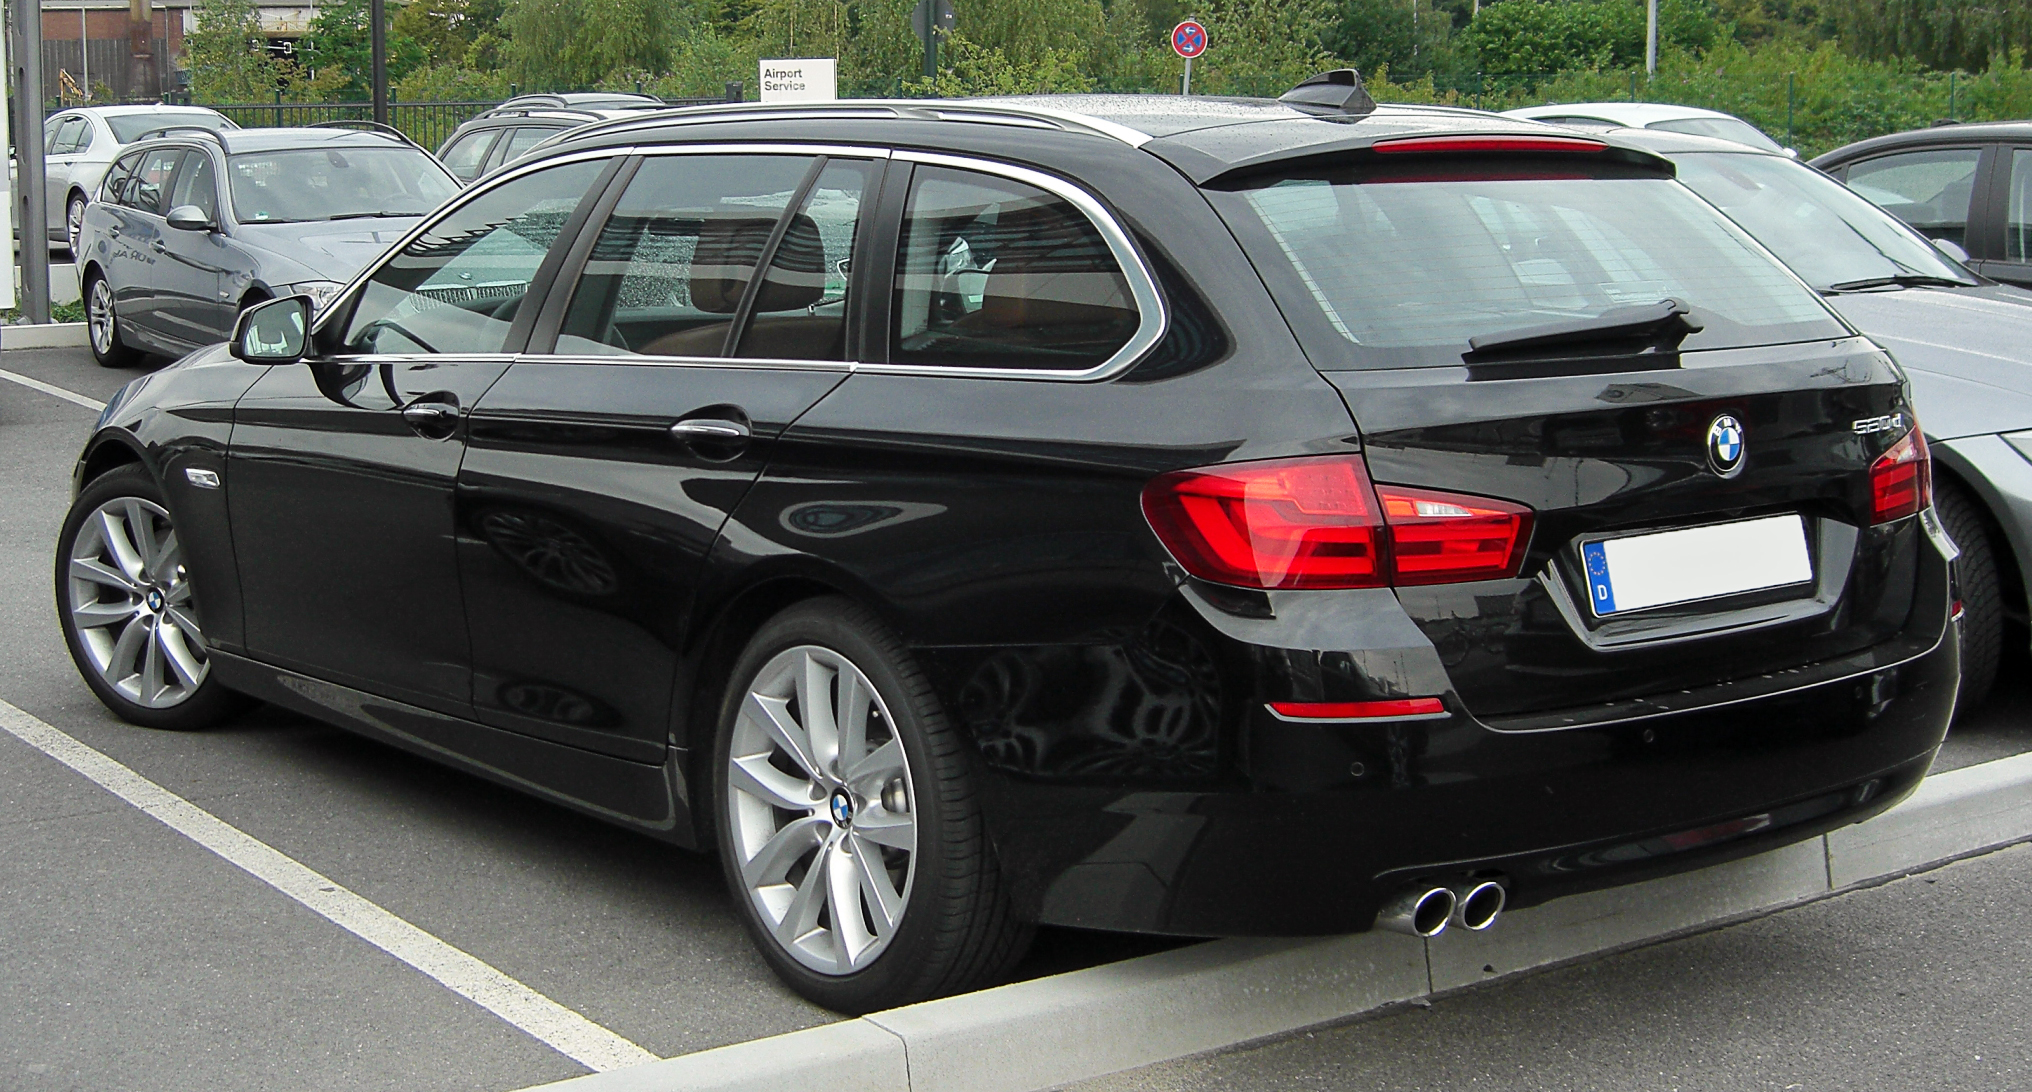 File:BMW 520d Touring (F11) rear 20100731.jpg